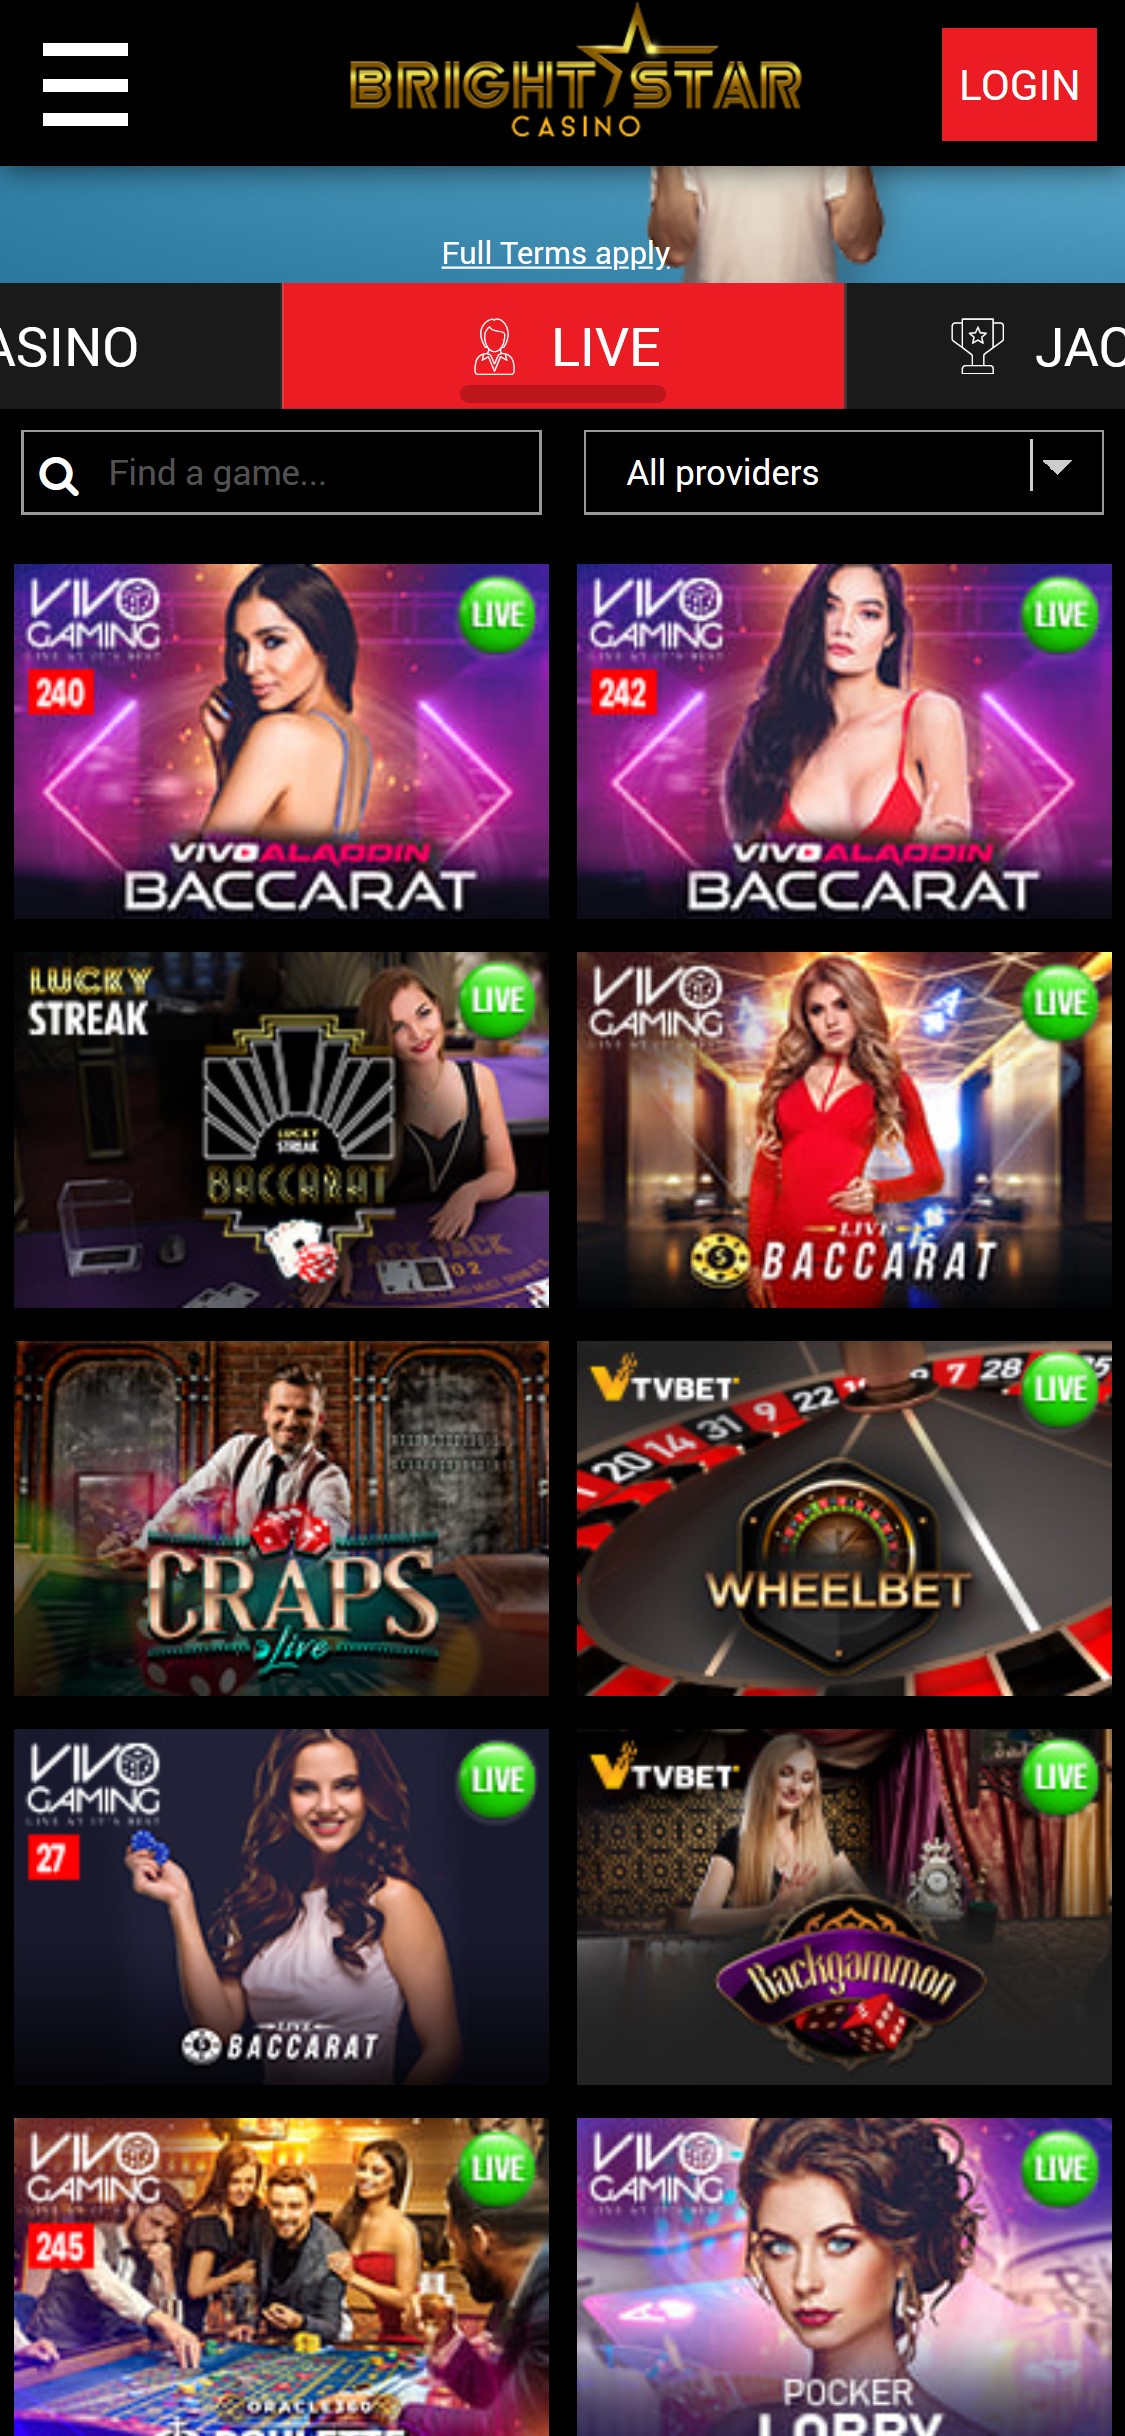 Brightstar Casino Mobile Live Dealer Games Review